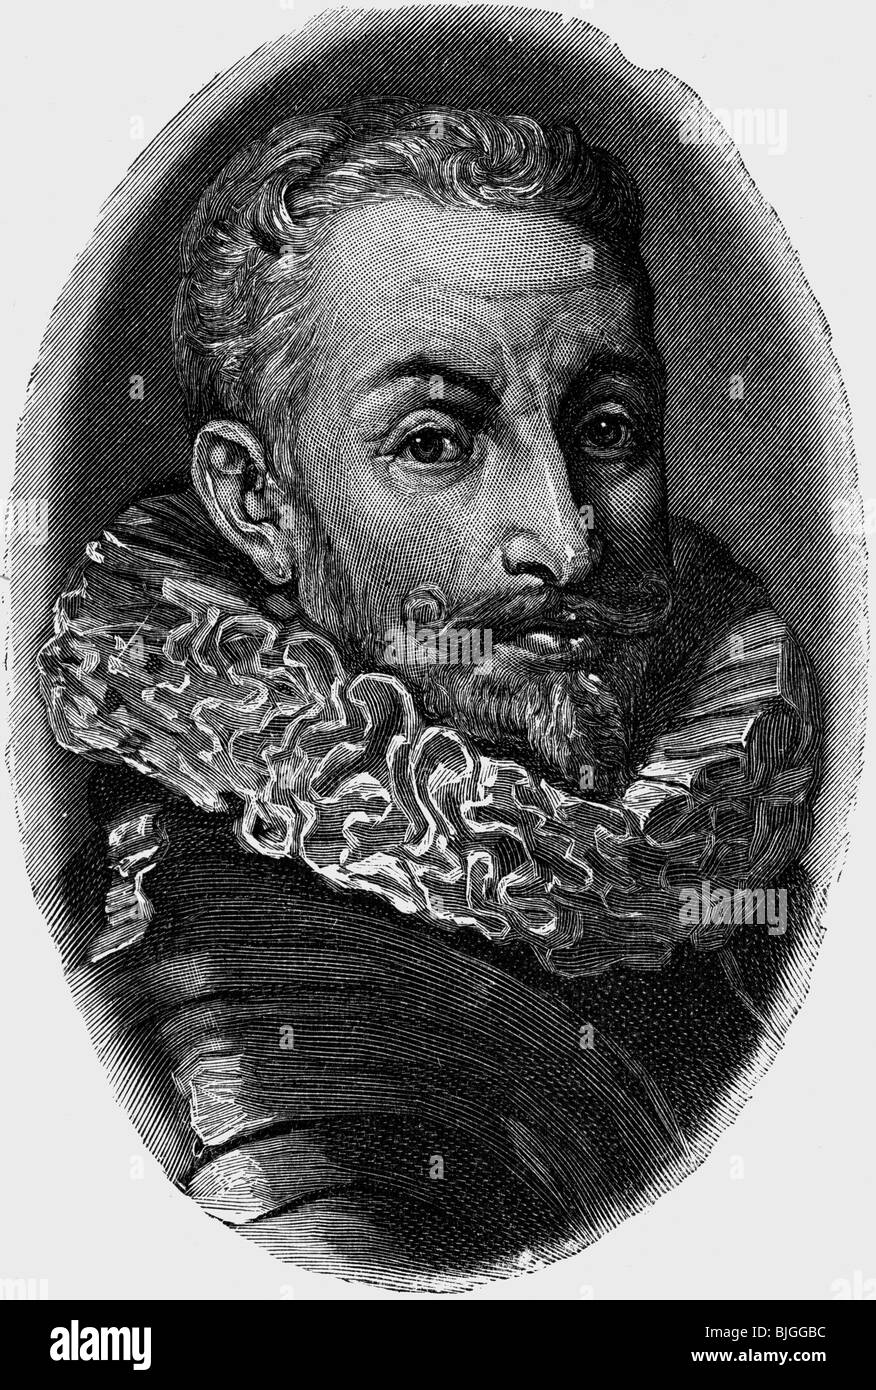 Tilly, Johann Tserclaes von, 1559 - 20.4.1632, Brabant general, portrait, wood engraving, 19th century,  , Stock Photo